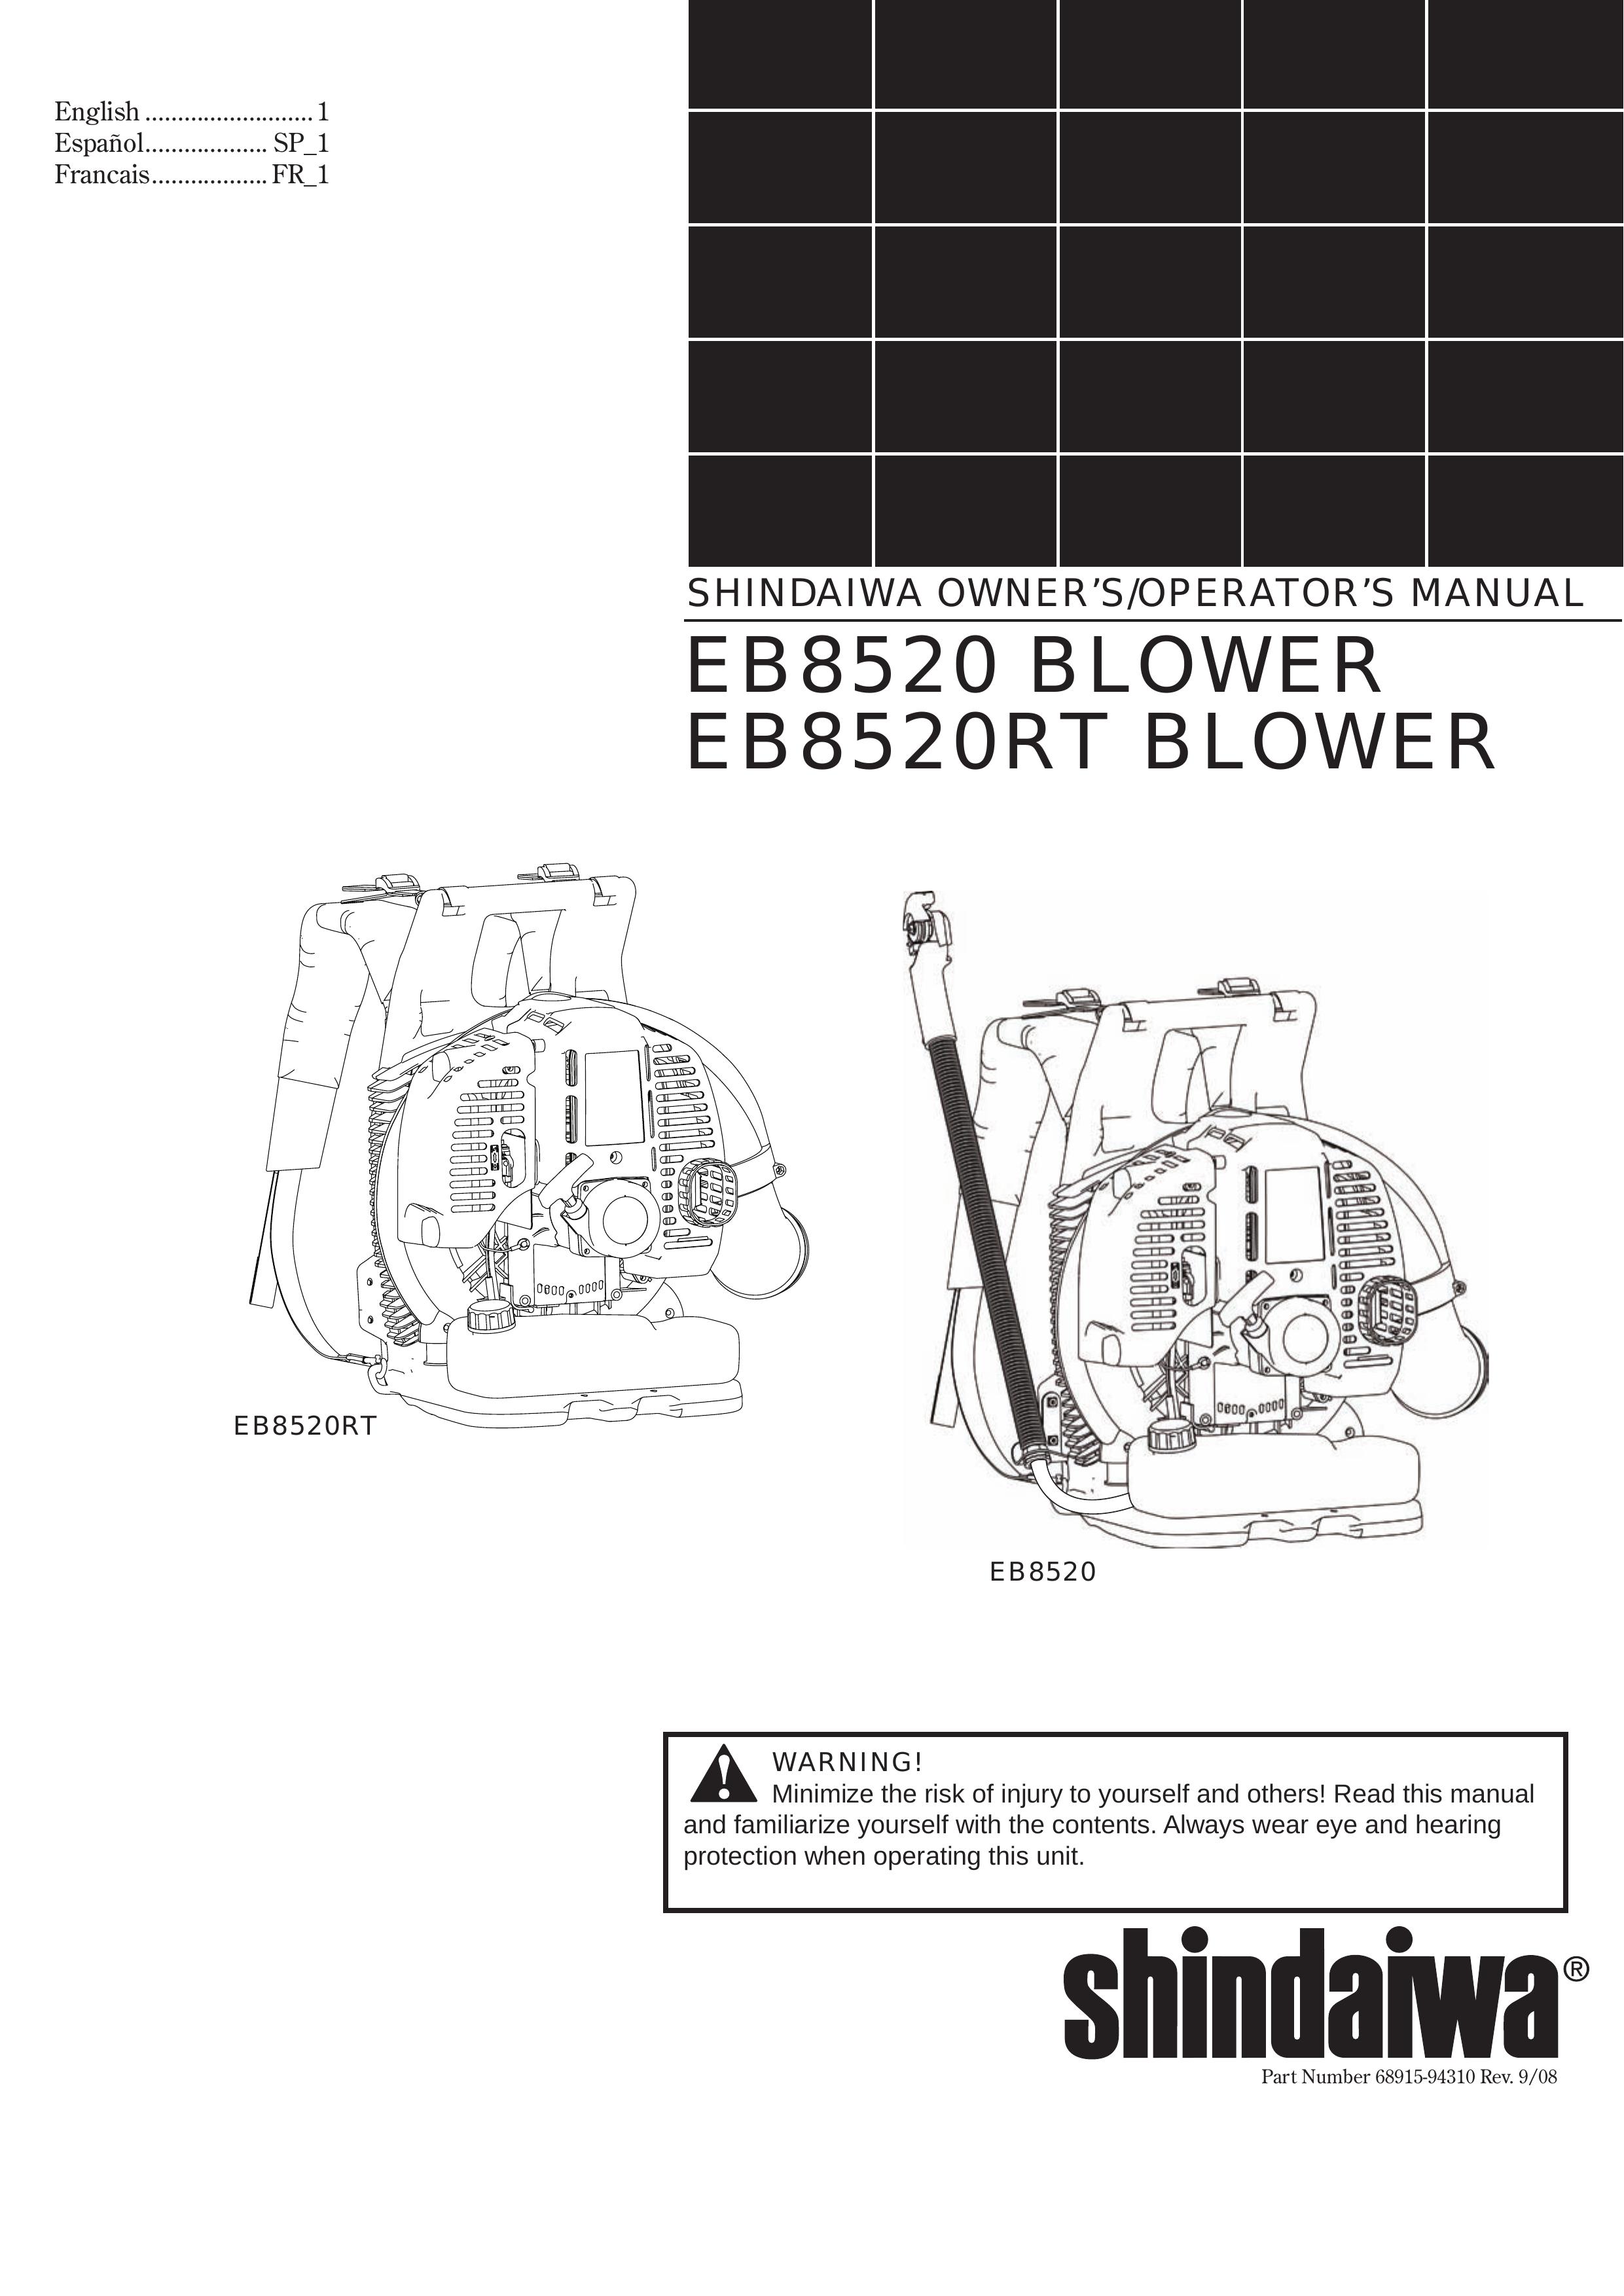 Shindaiwa EB8520RT EVC Blower User Manual